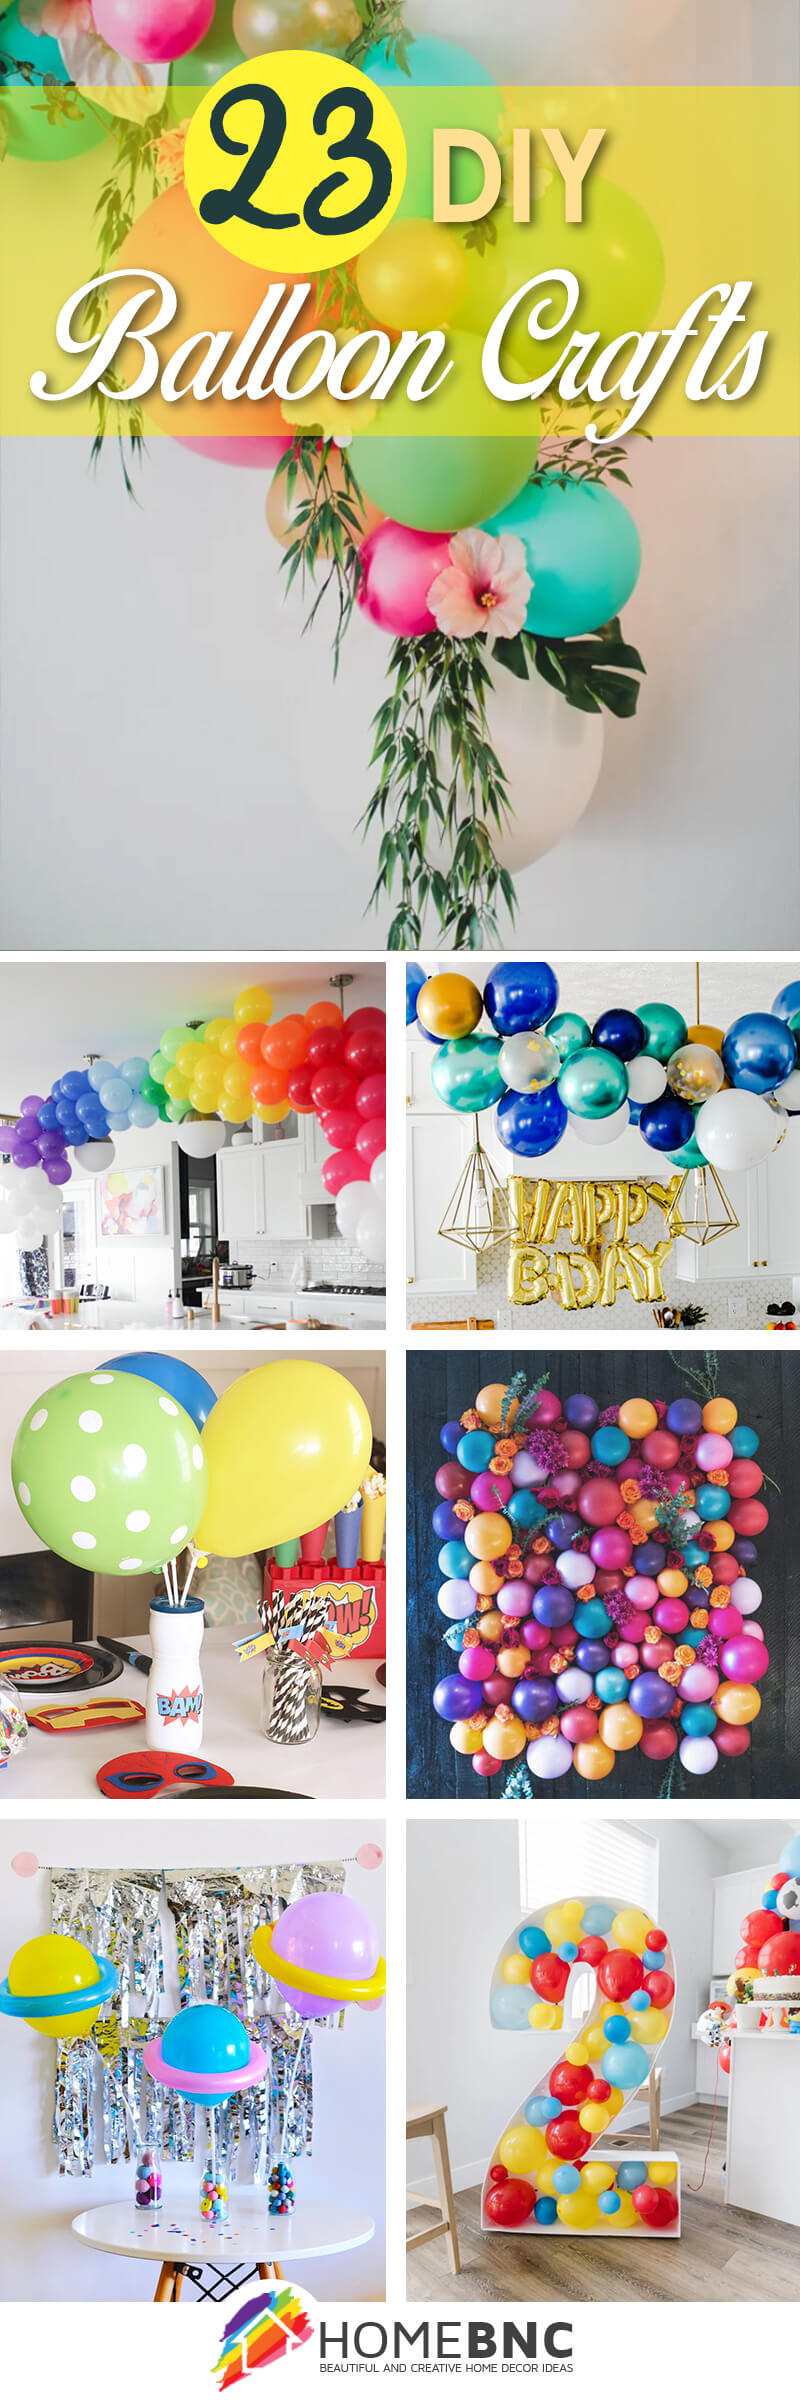 Best DIY Balloon Decorations